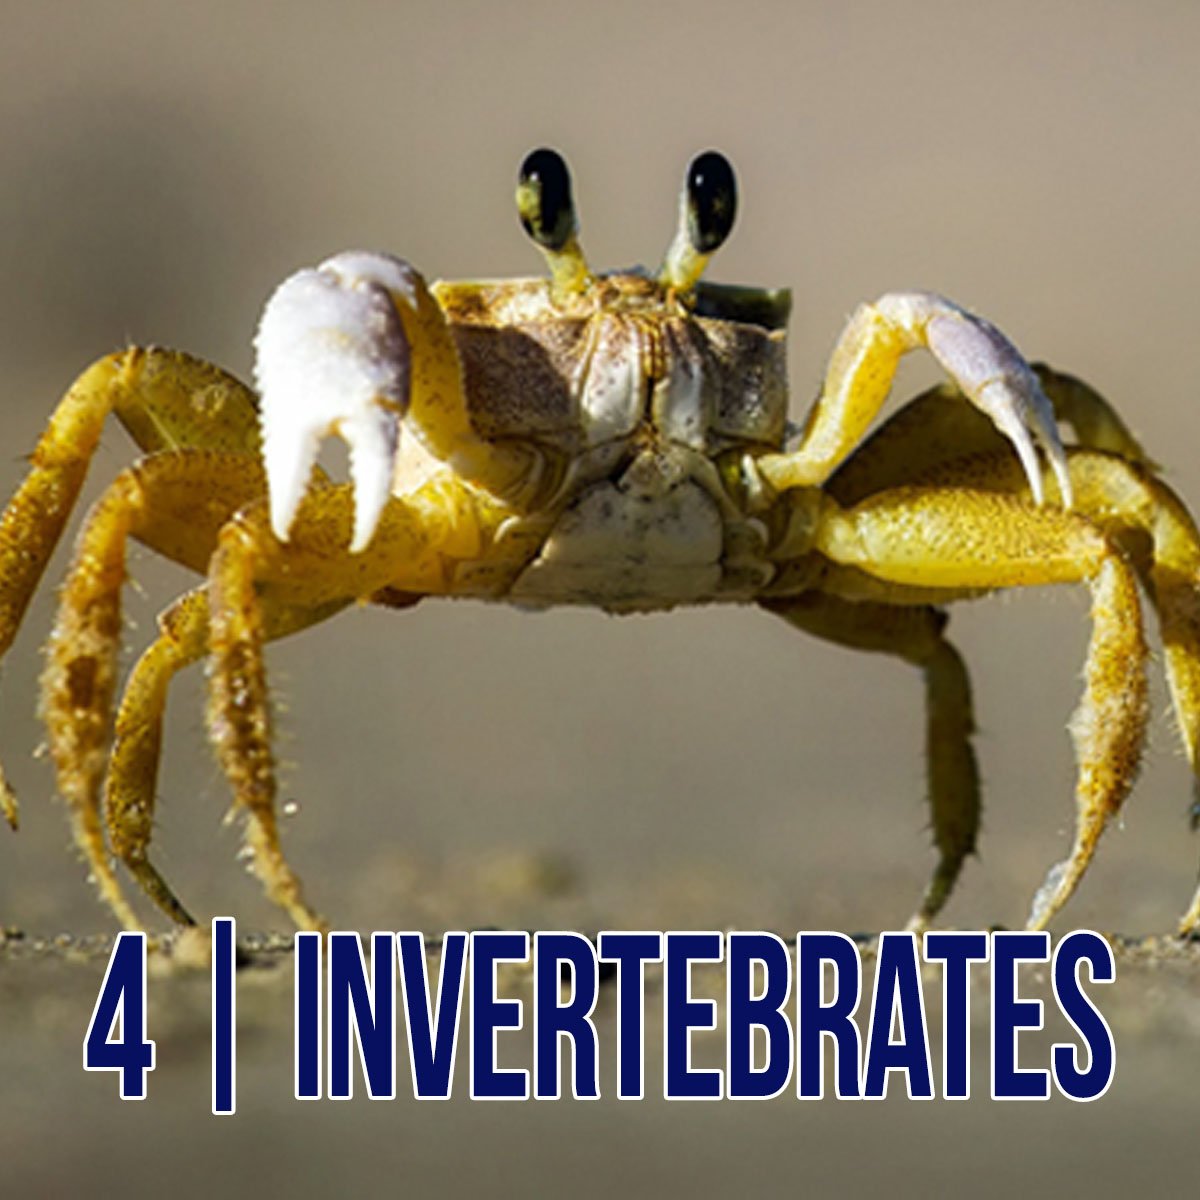 eLearning - Invertebrates.jpg